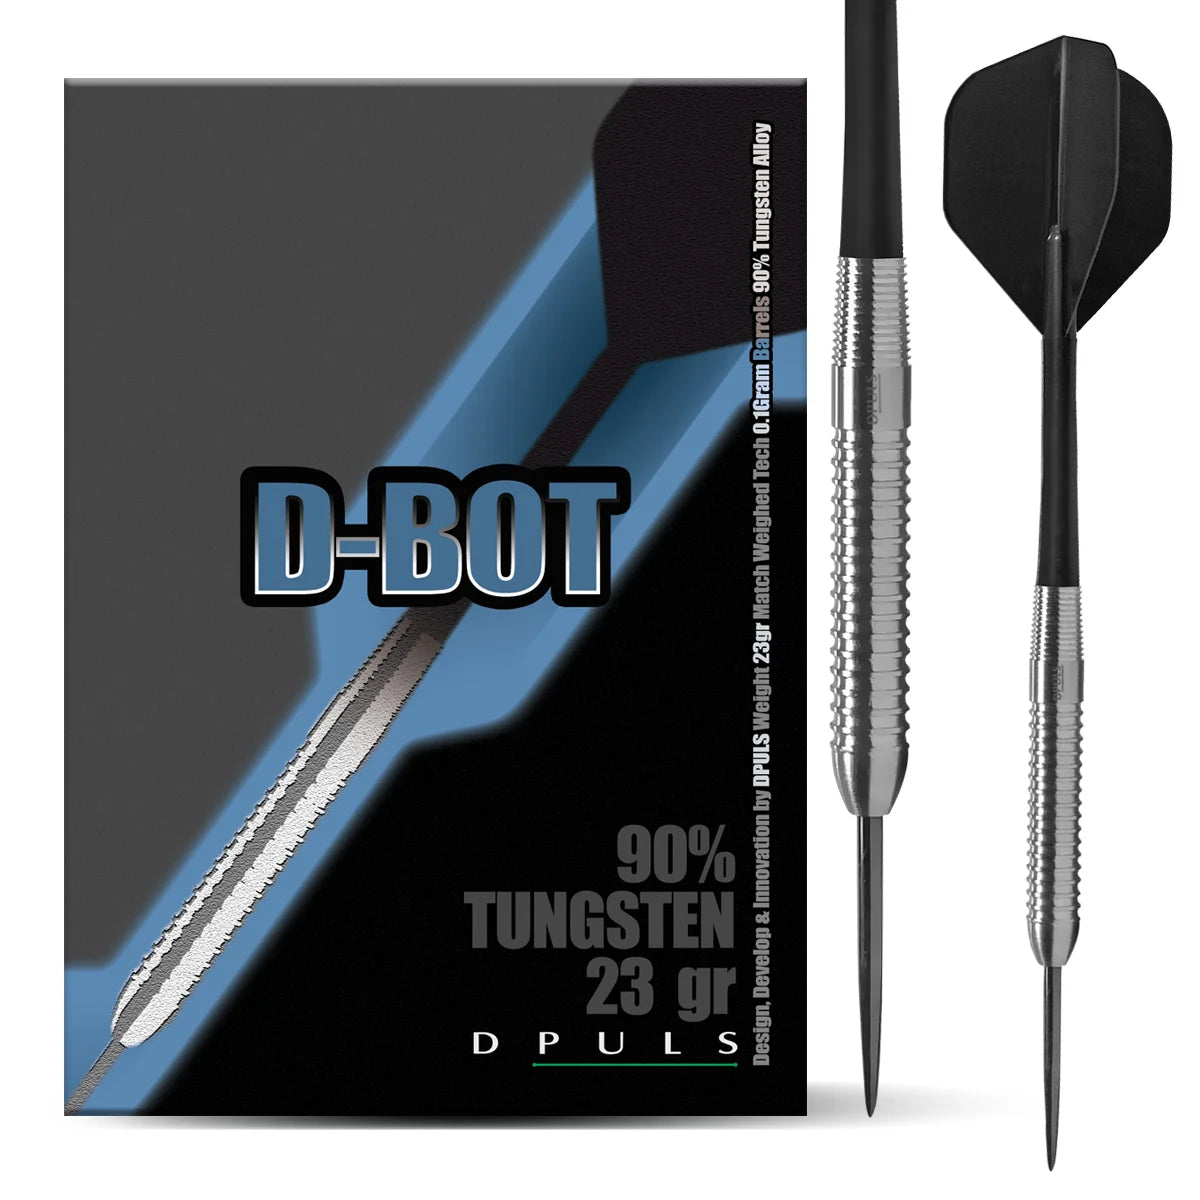 DPULS D-BOT Steel Darts 23g/90%